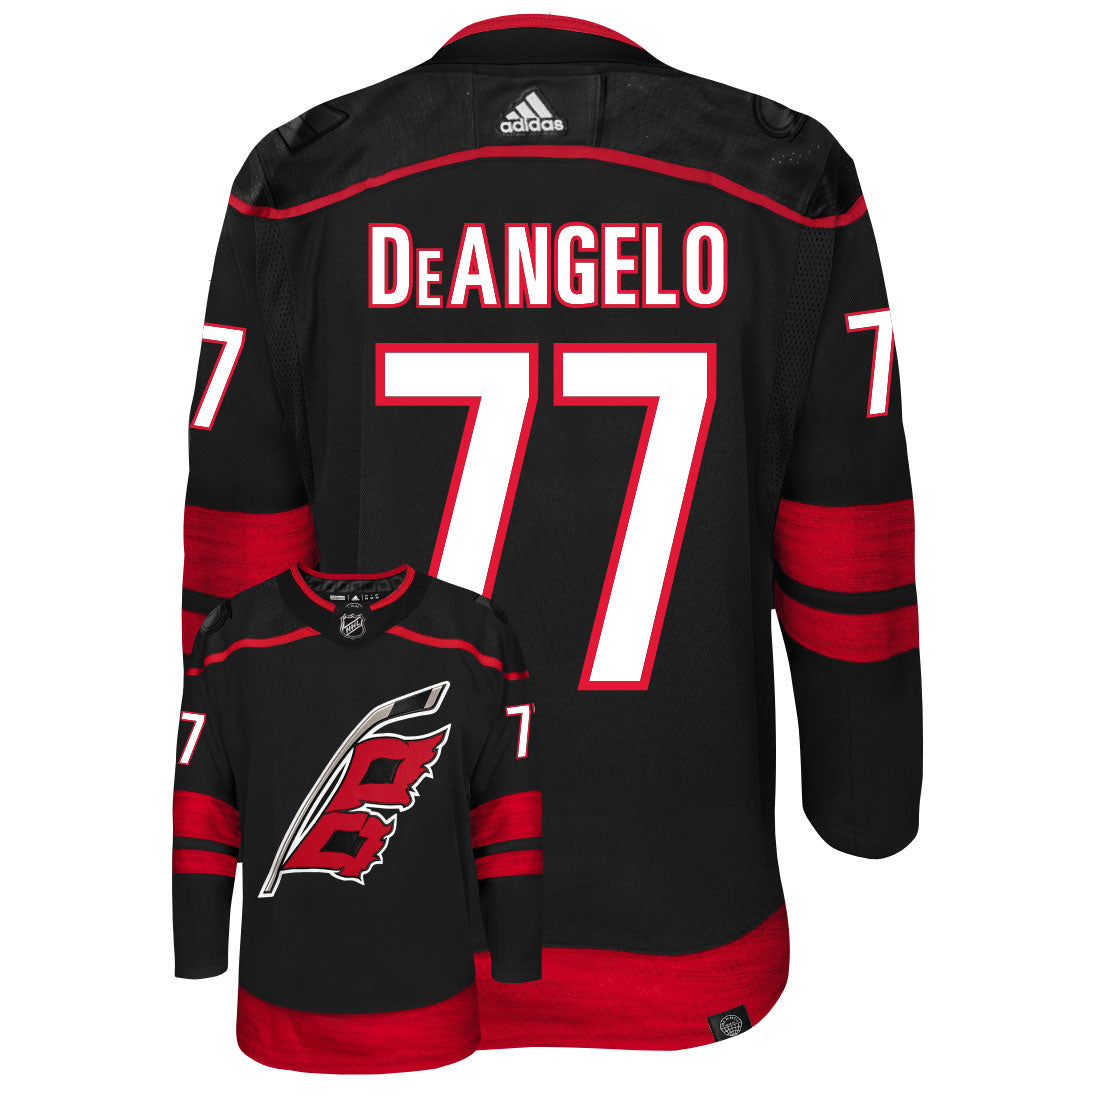 Tony DeAngelo Carolina Hurricanes Adidas Primegreen Authentic Third Alternate NHL Hockey Jersey - Back/Front View